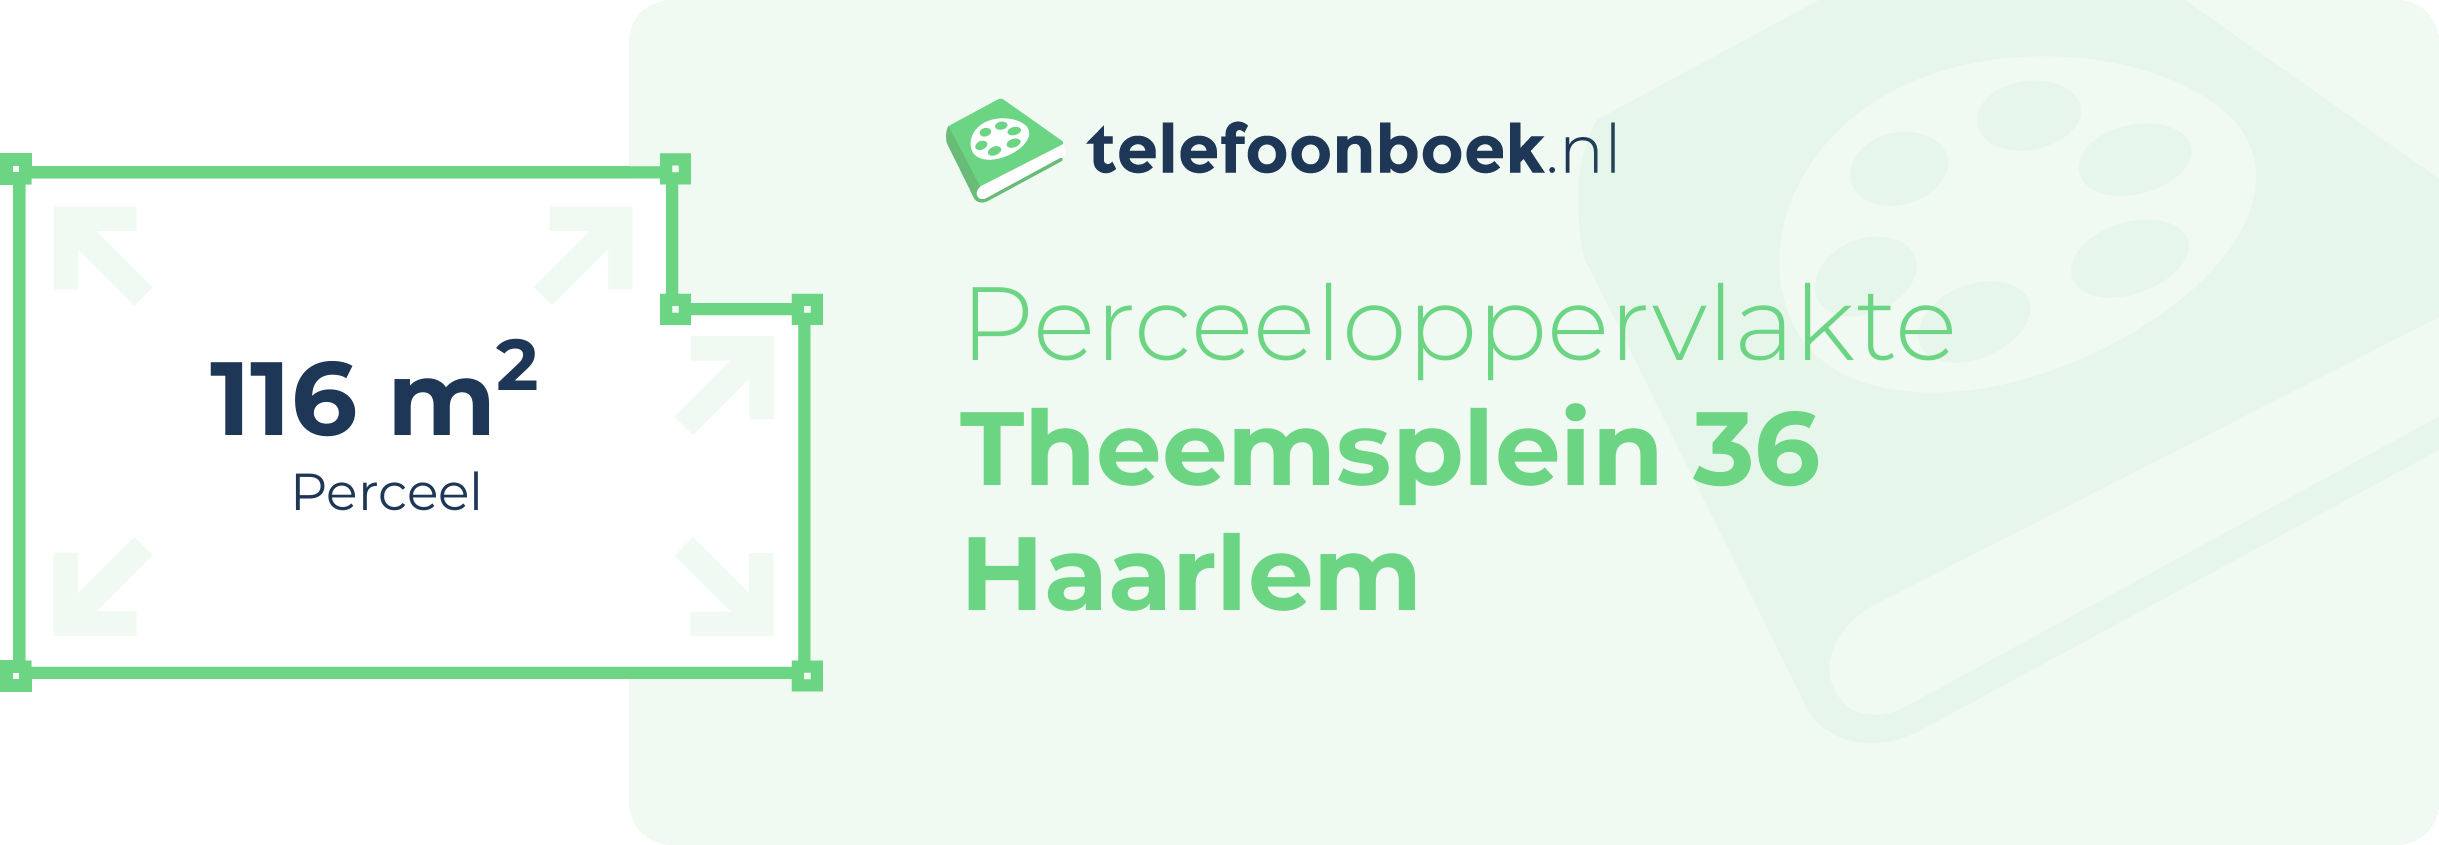 Perceeloppervlakte Theemsplein 36 Haarlem